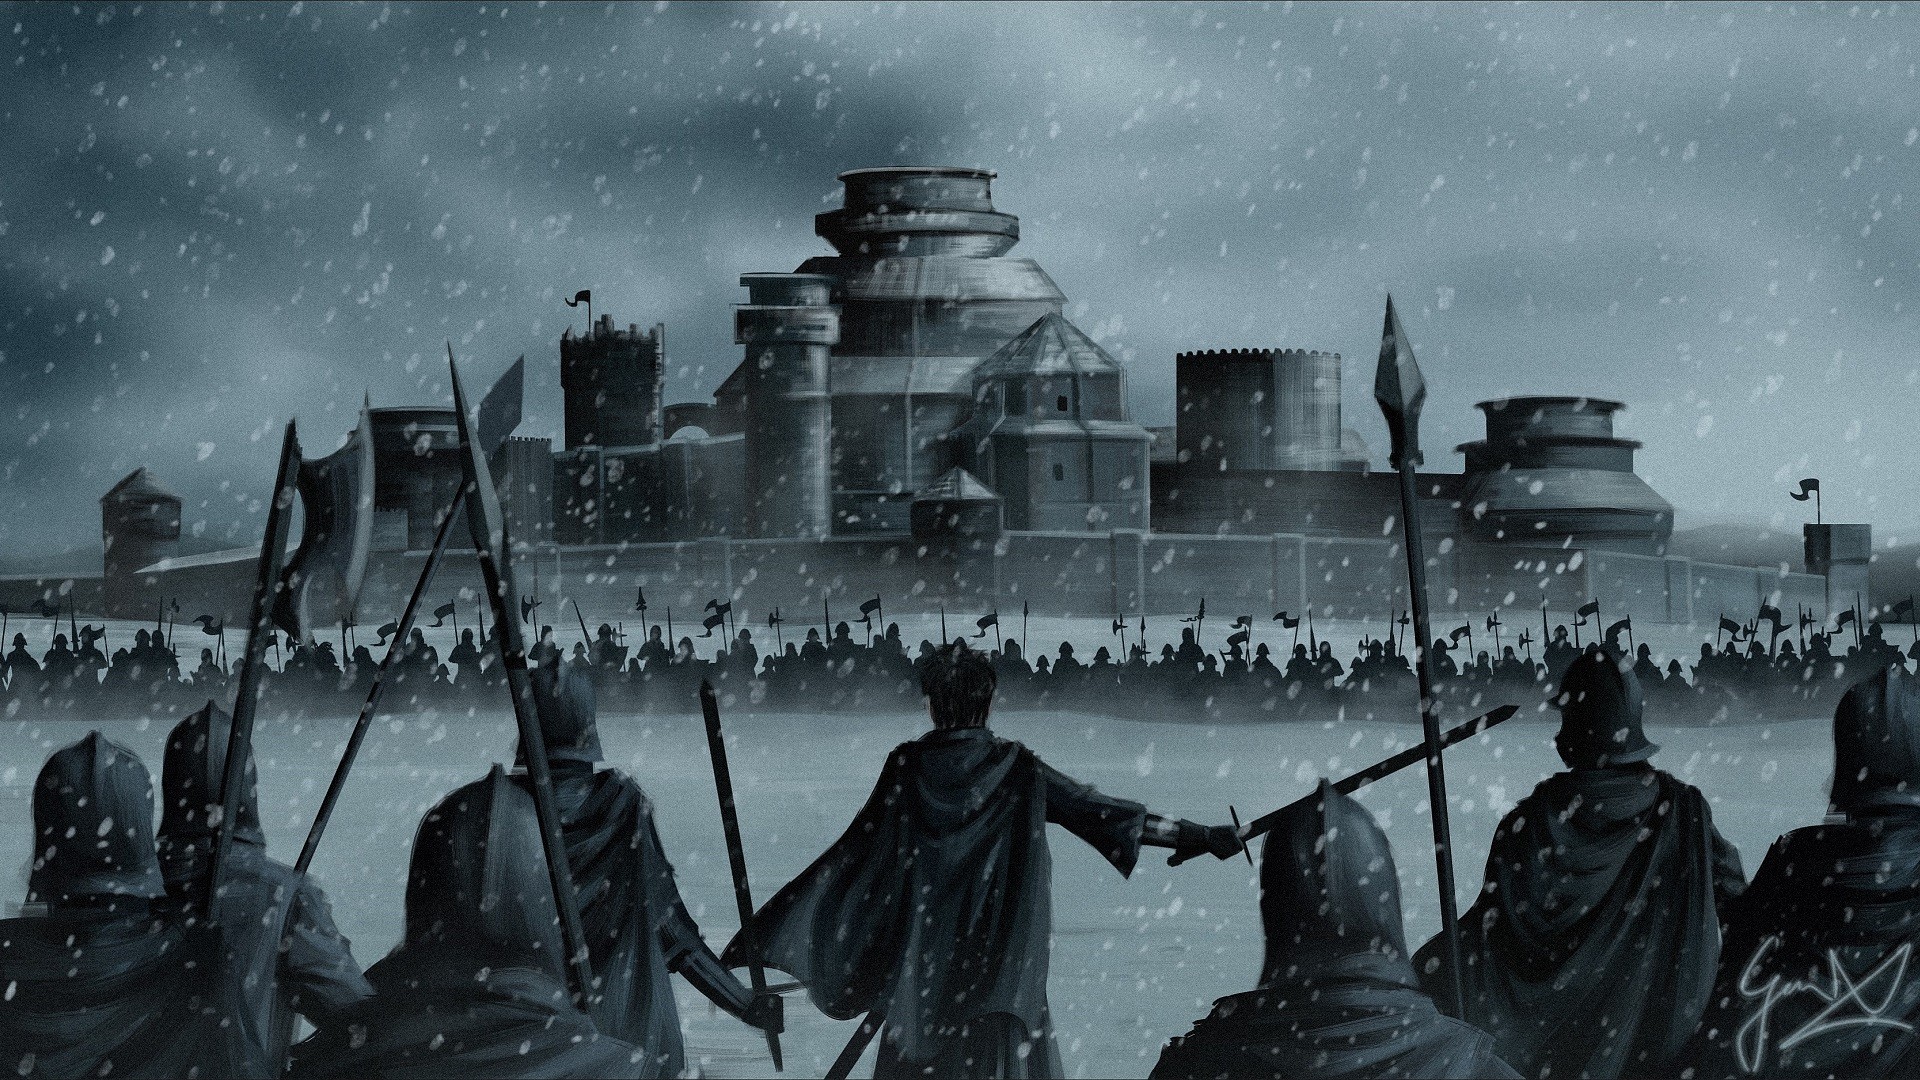 General 1920x1080 Game of Thrones Winterfell Stannis Baratheon war army snow winter artwork A Song of Ice and Fire fan art digital art fantasy art warrior TV series